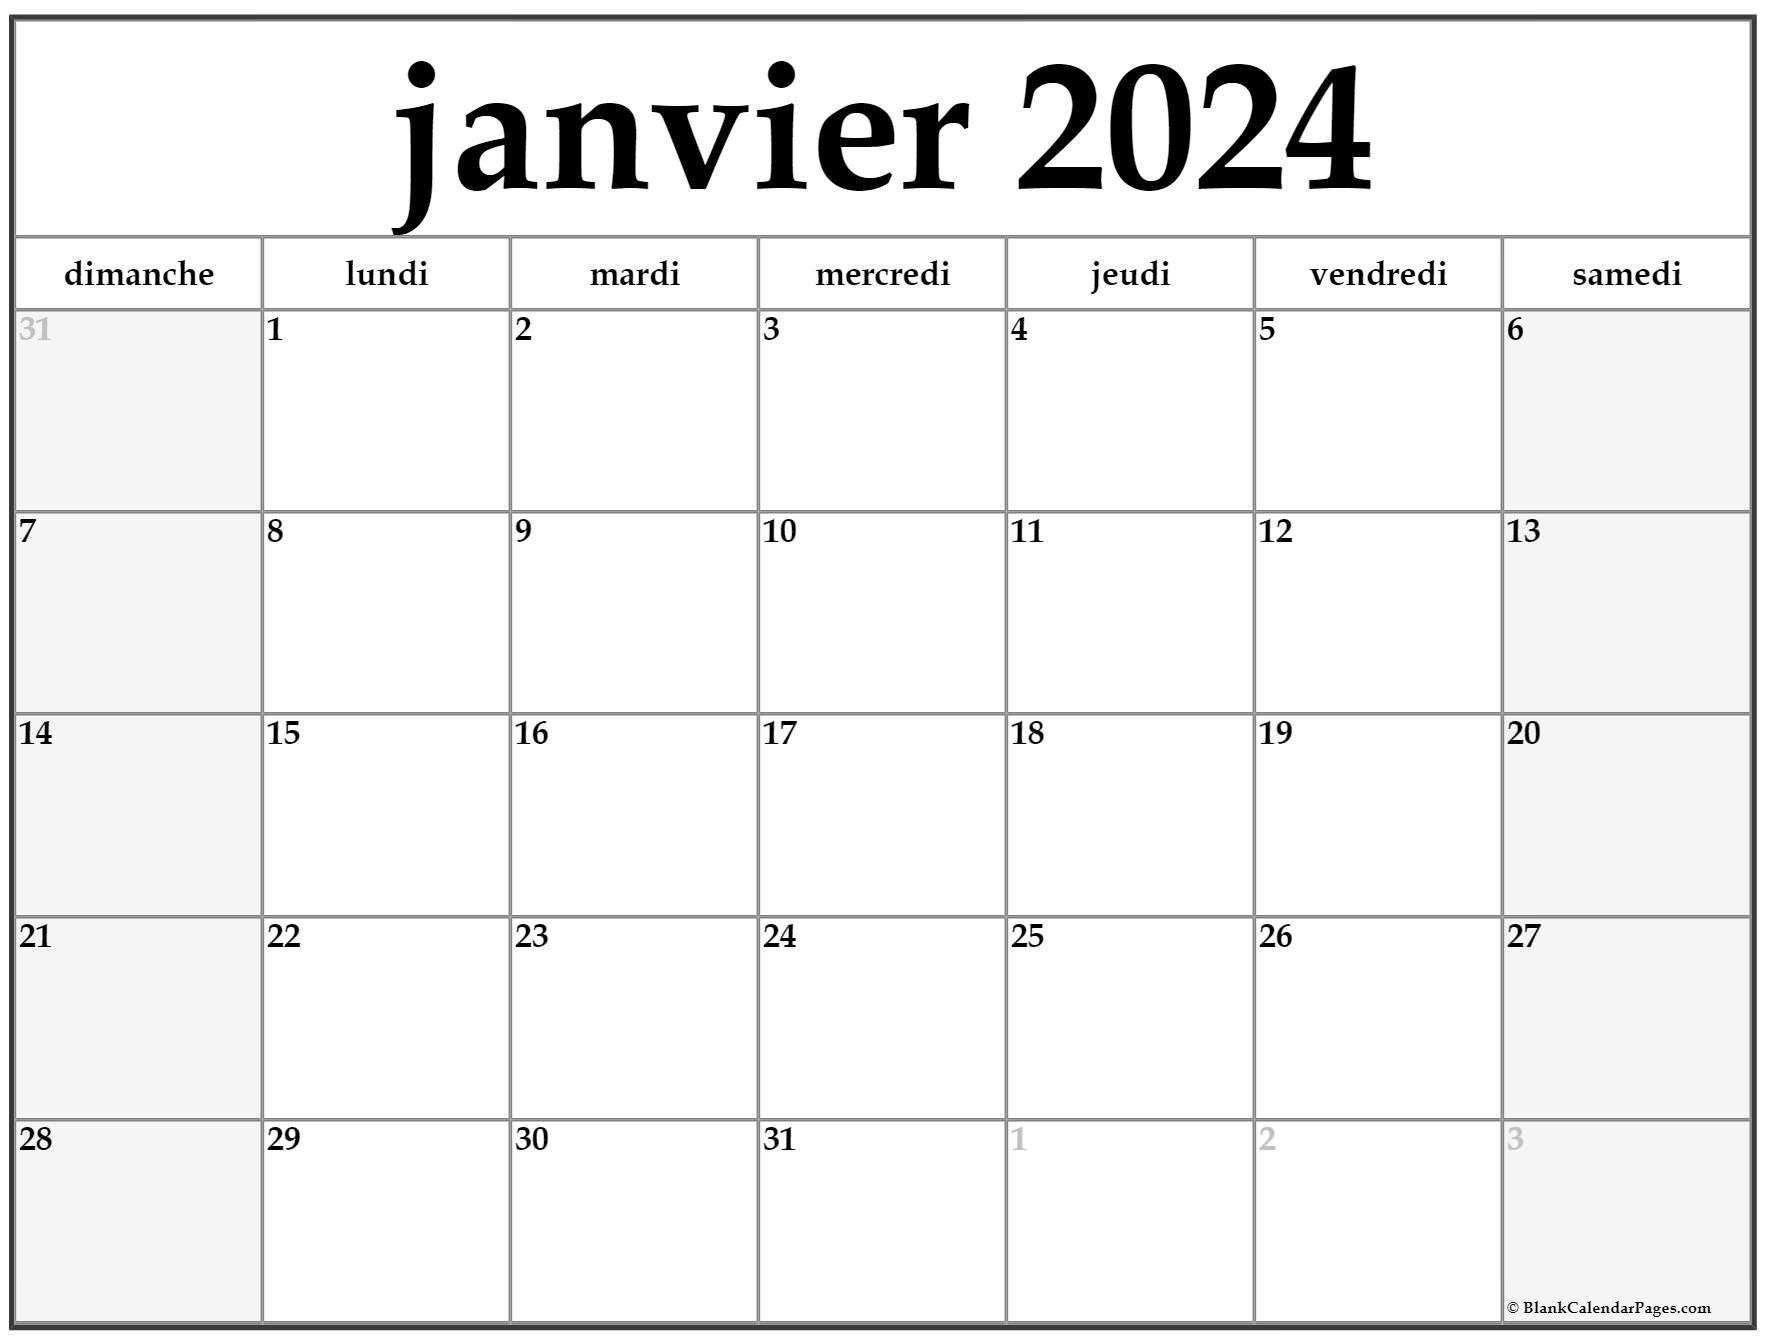 Calendrier 2024 mensuel à imprimer